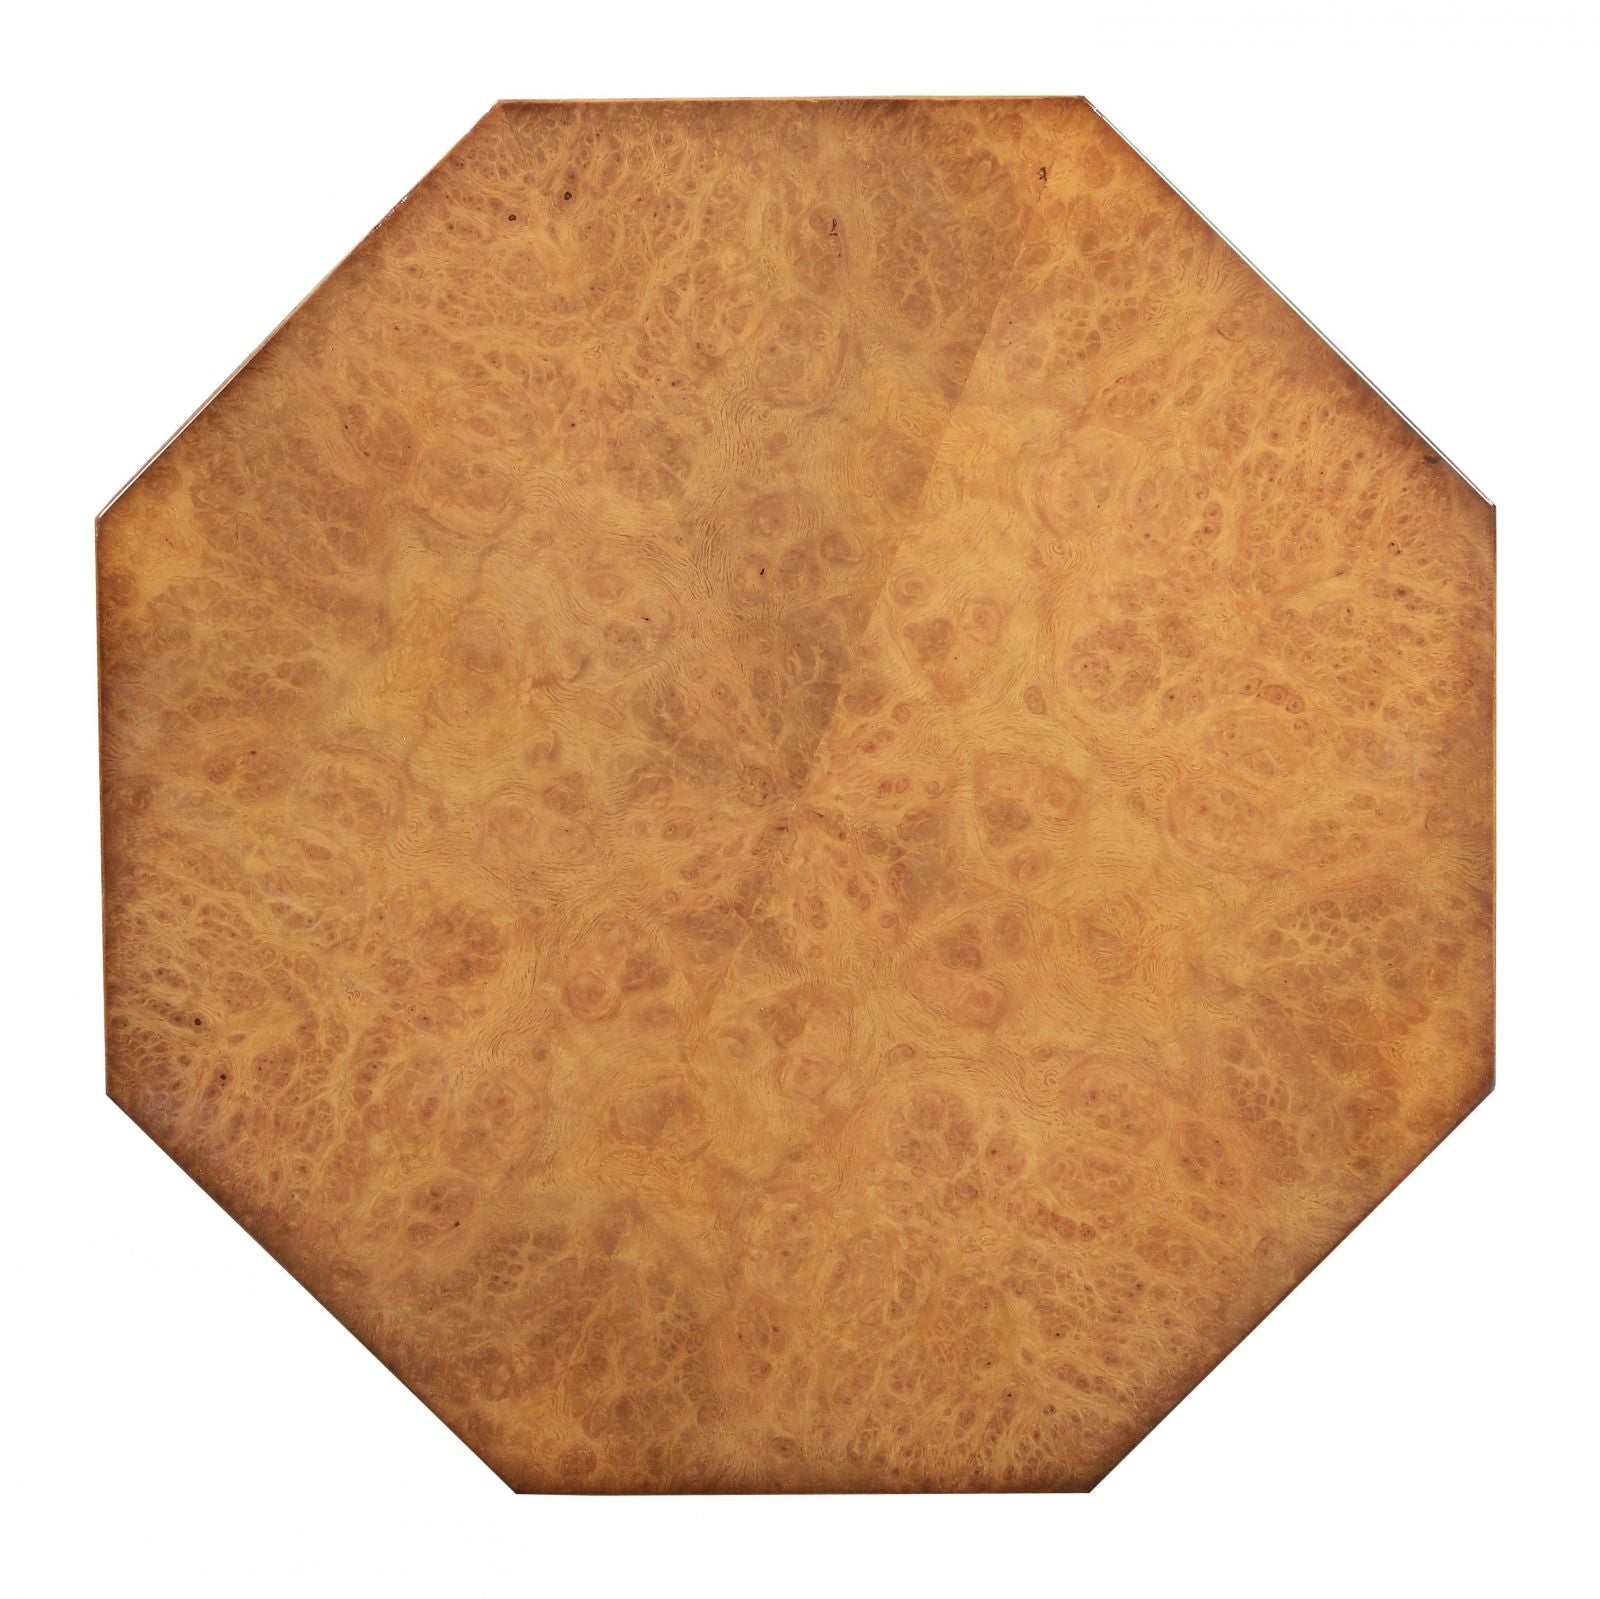 Octagonal wine table - Honey burr oak